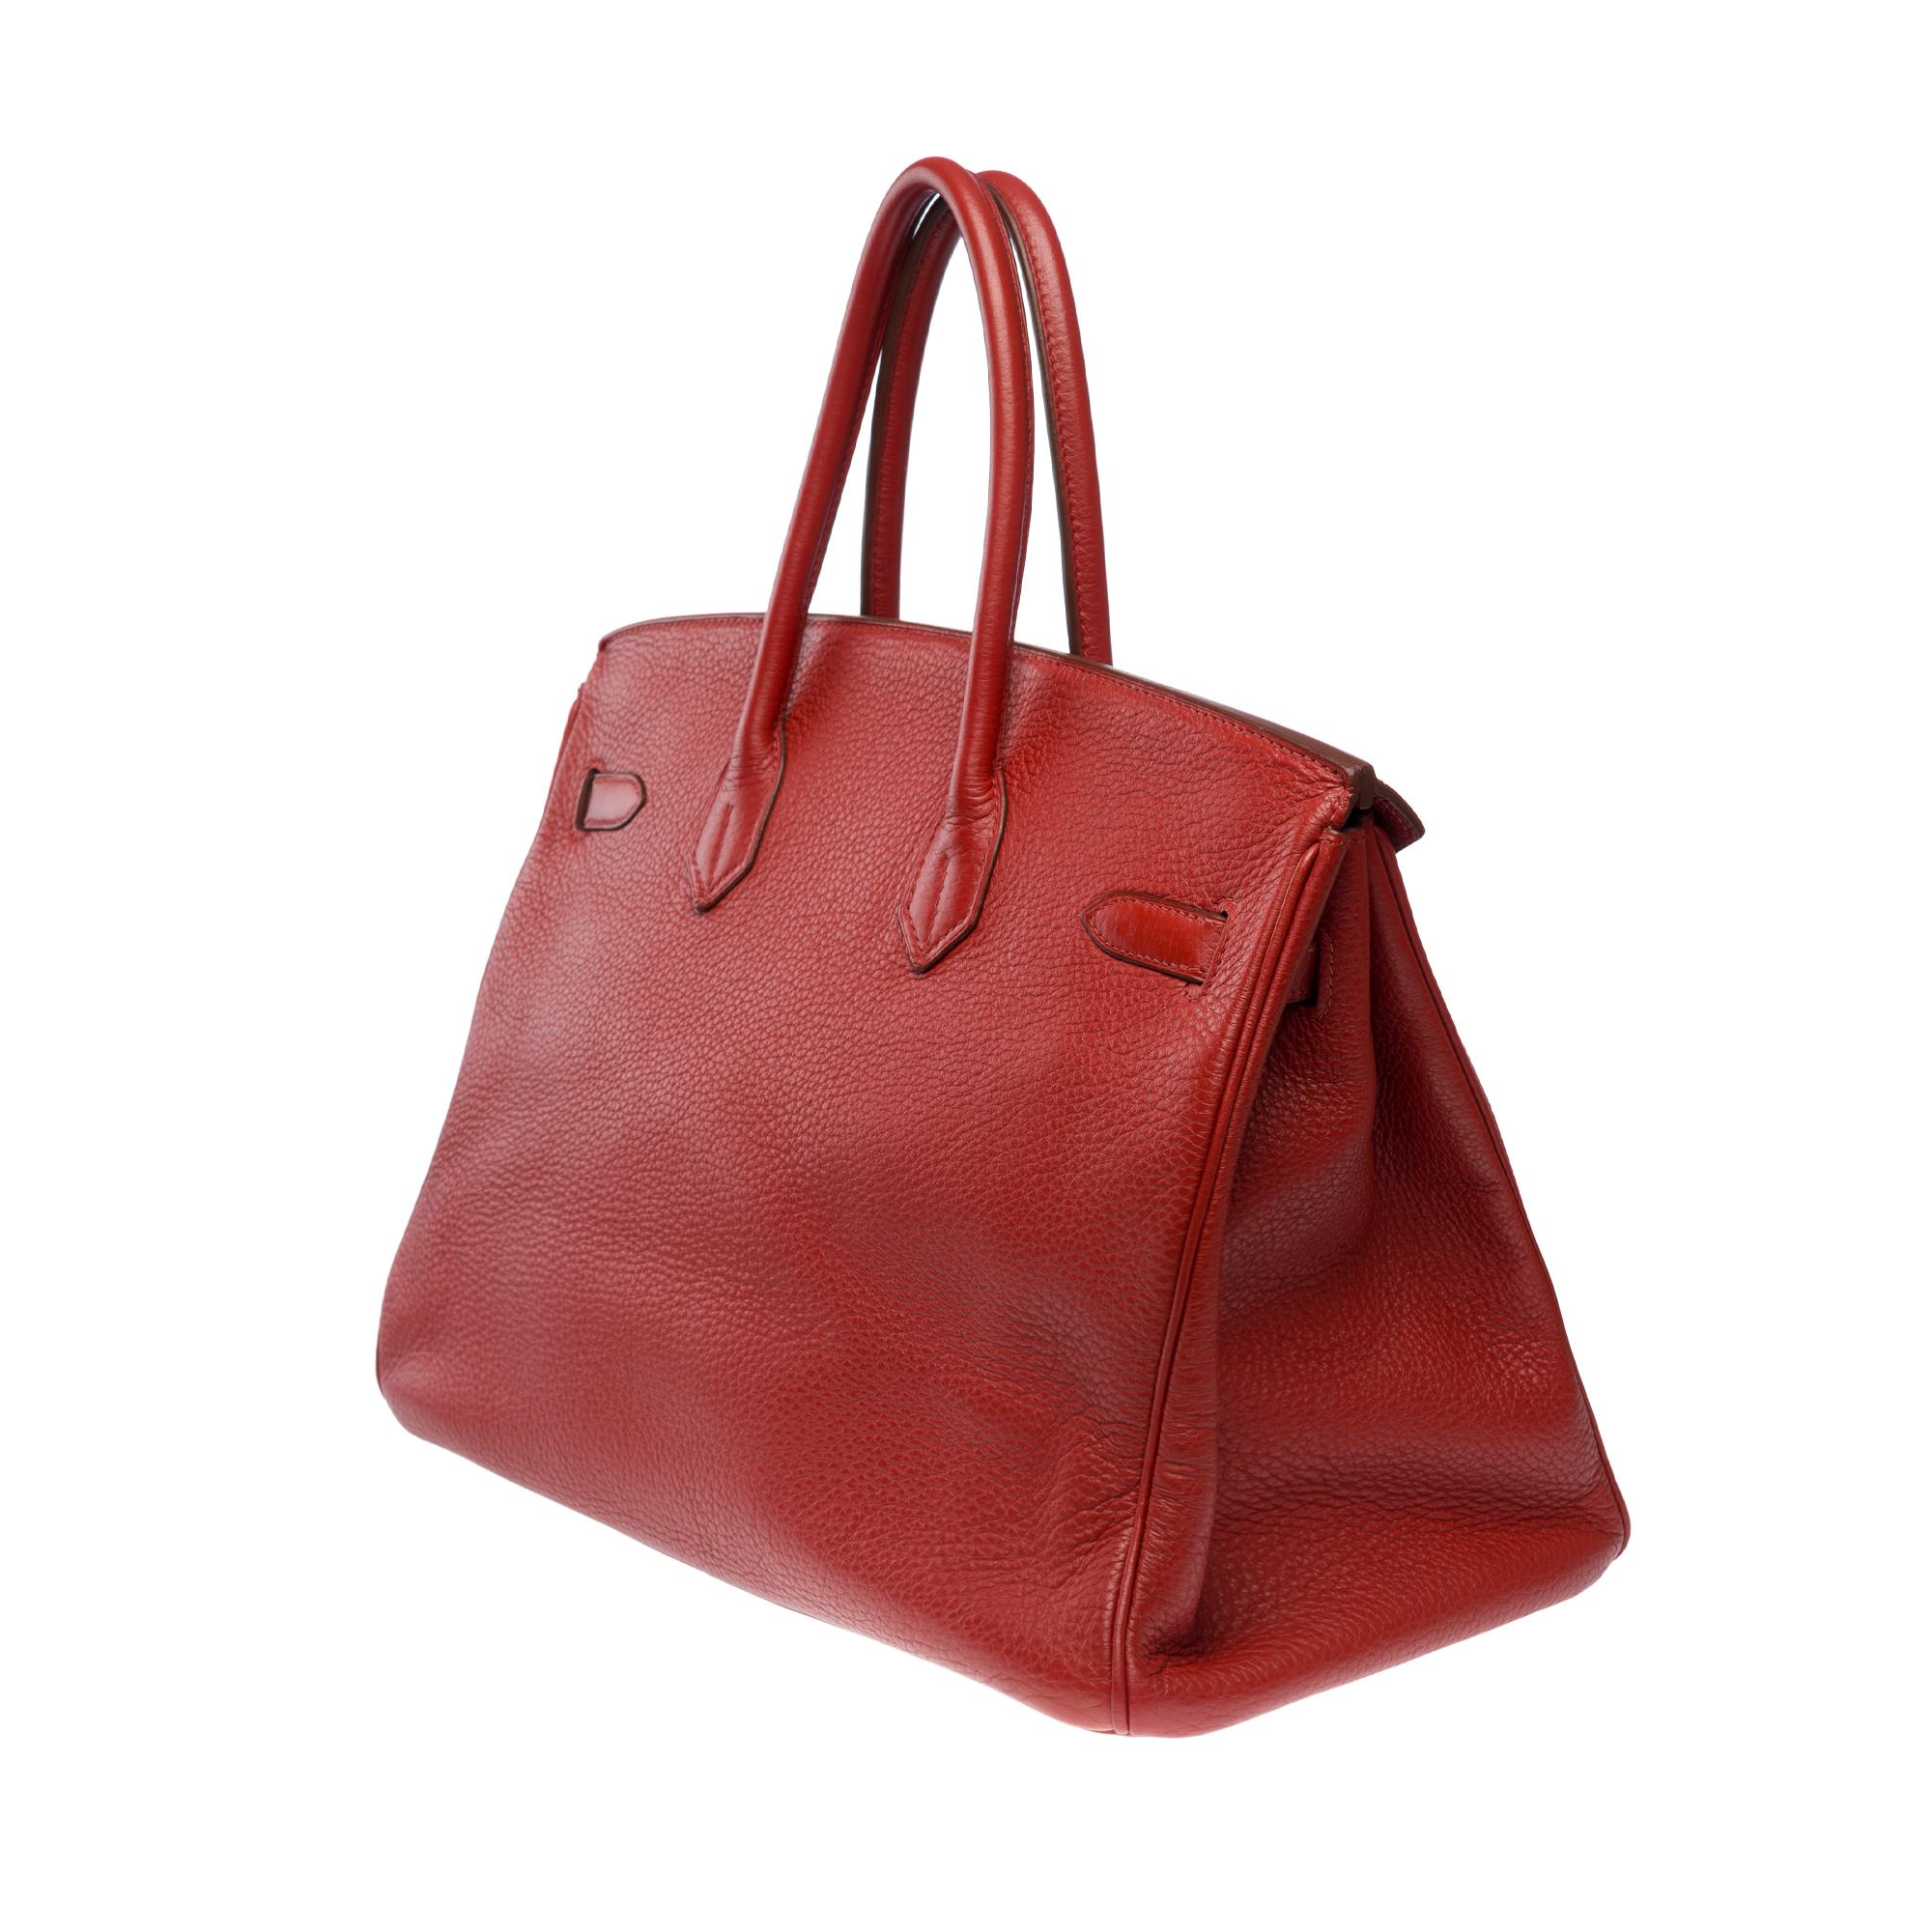 Stunning Hermès Birkin 35 handbag in Sienne Togo leather, SHW For Sale 3